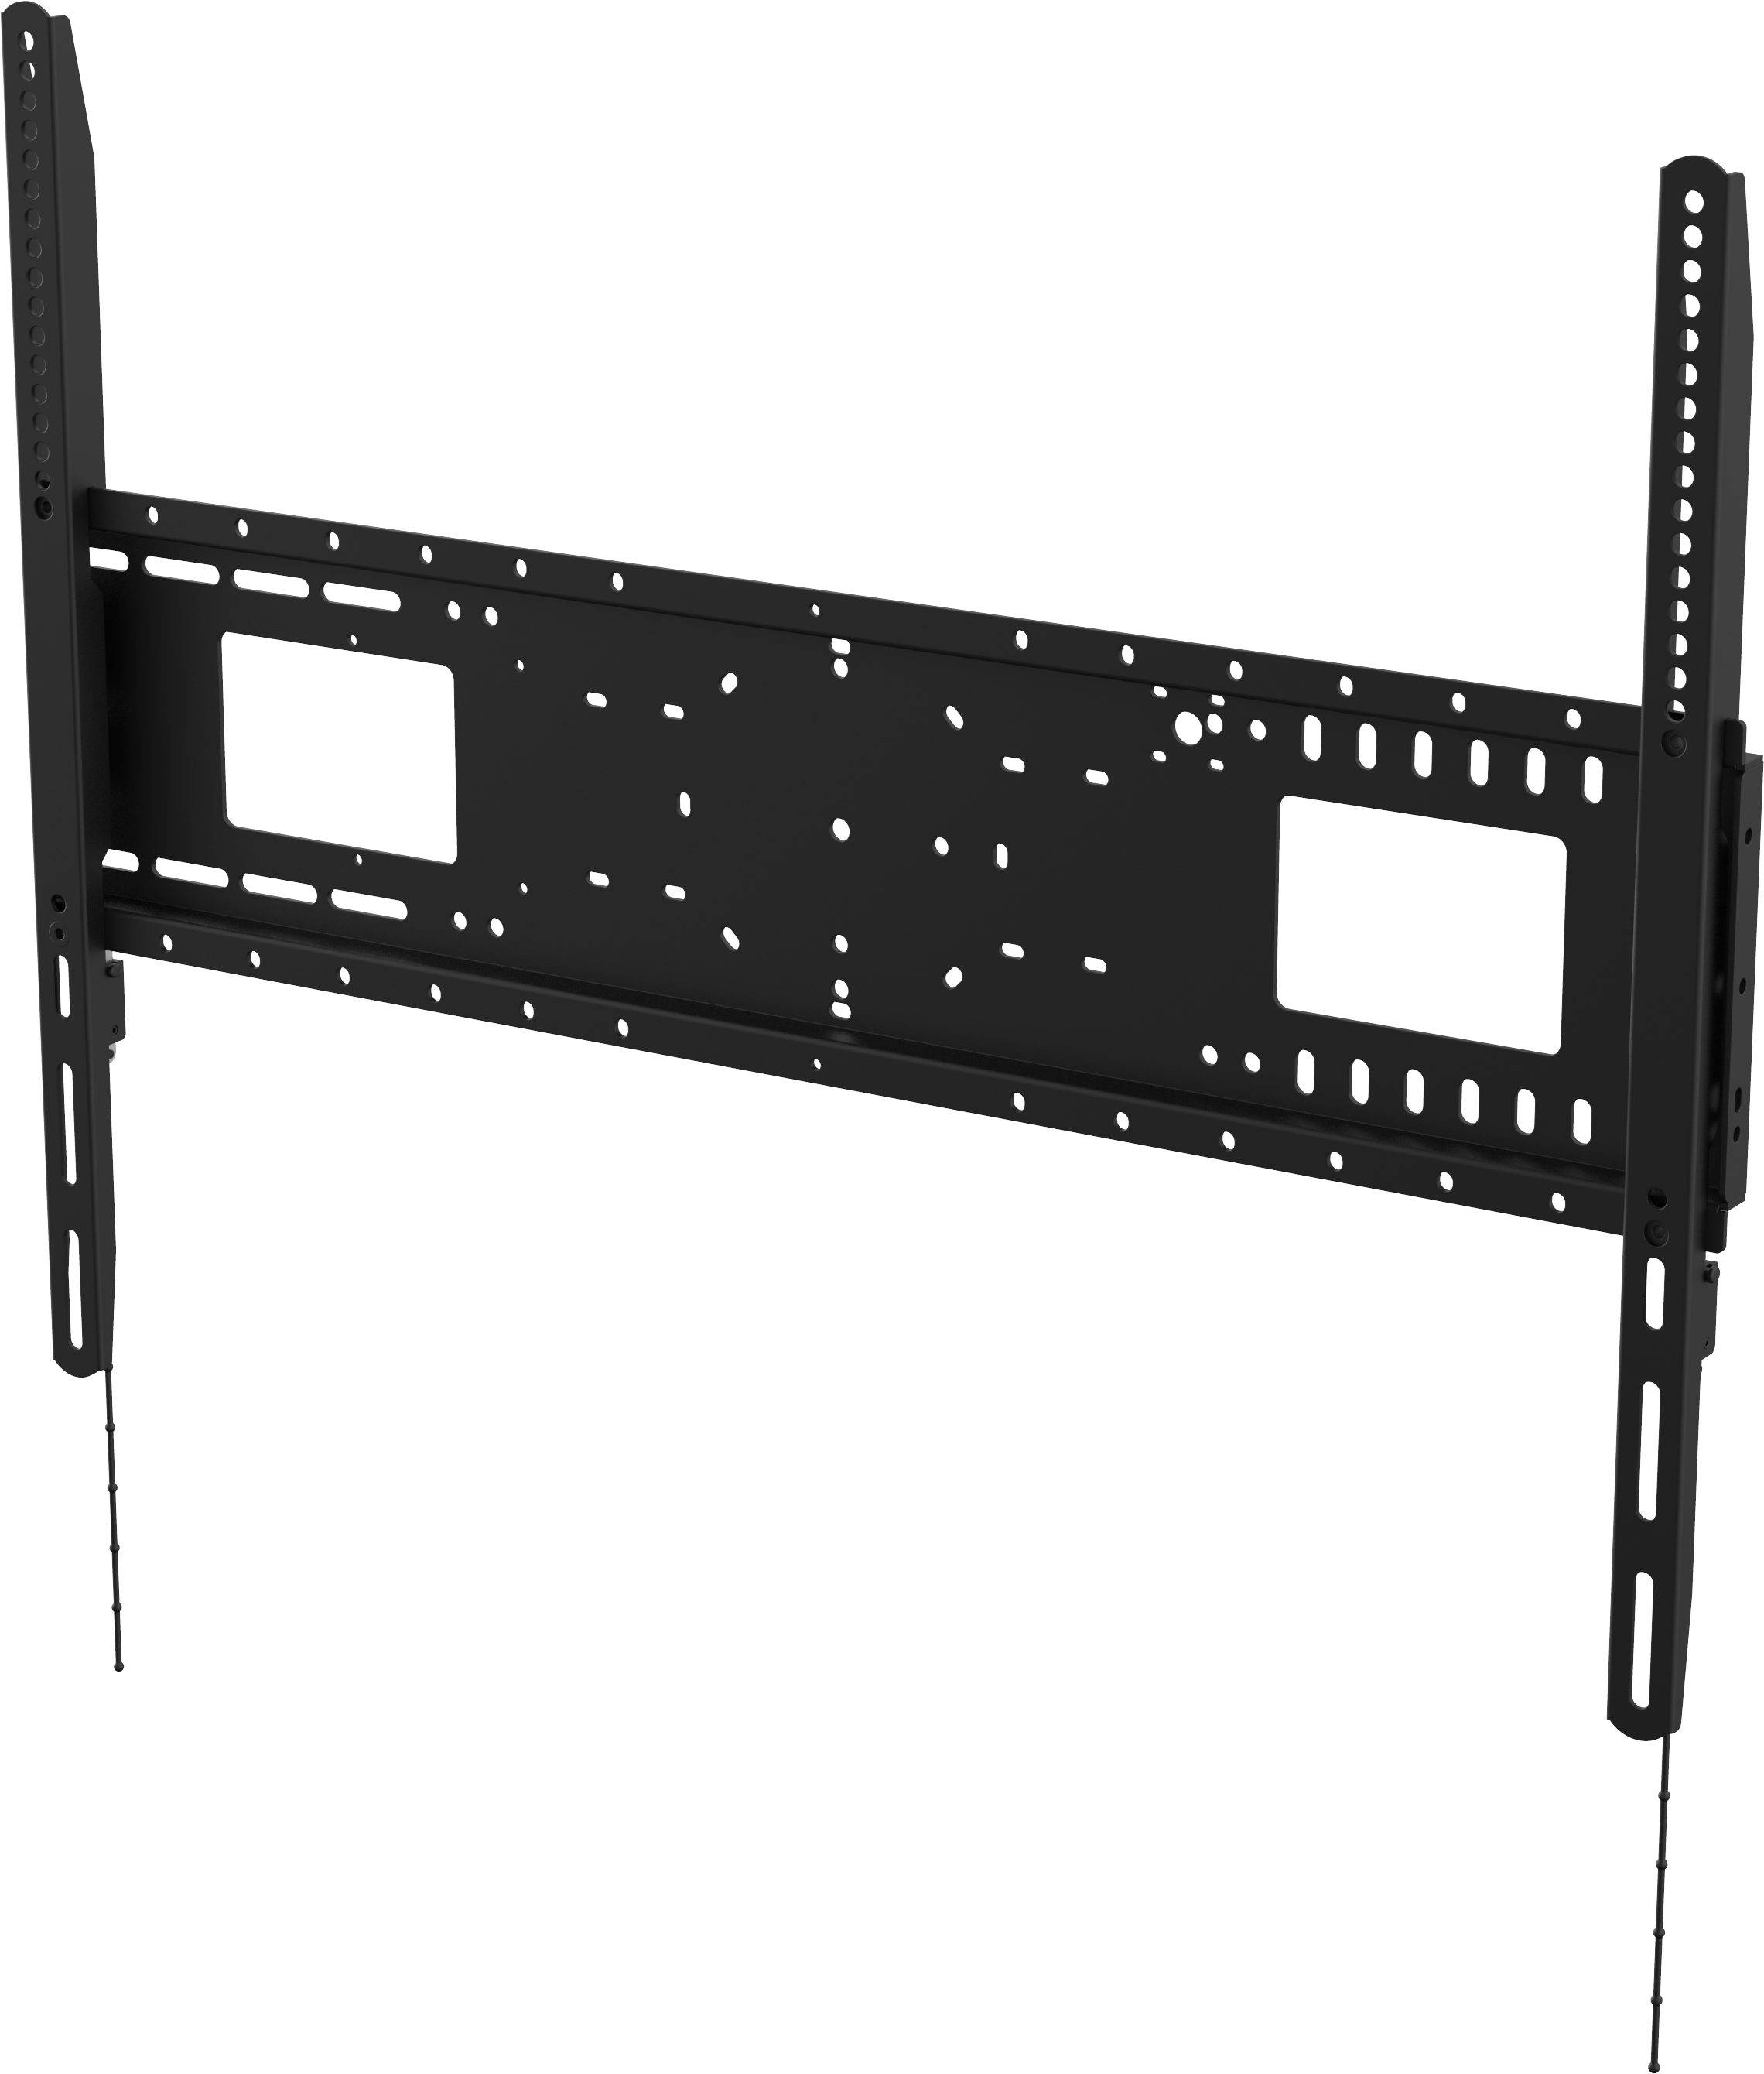 An image showing Heavy Duty Flat-Panel Wall Mount 800×600